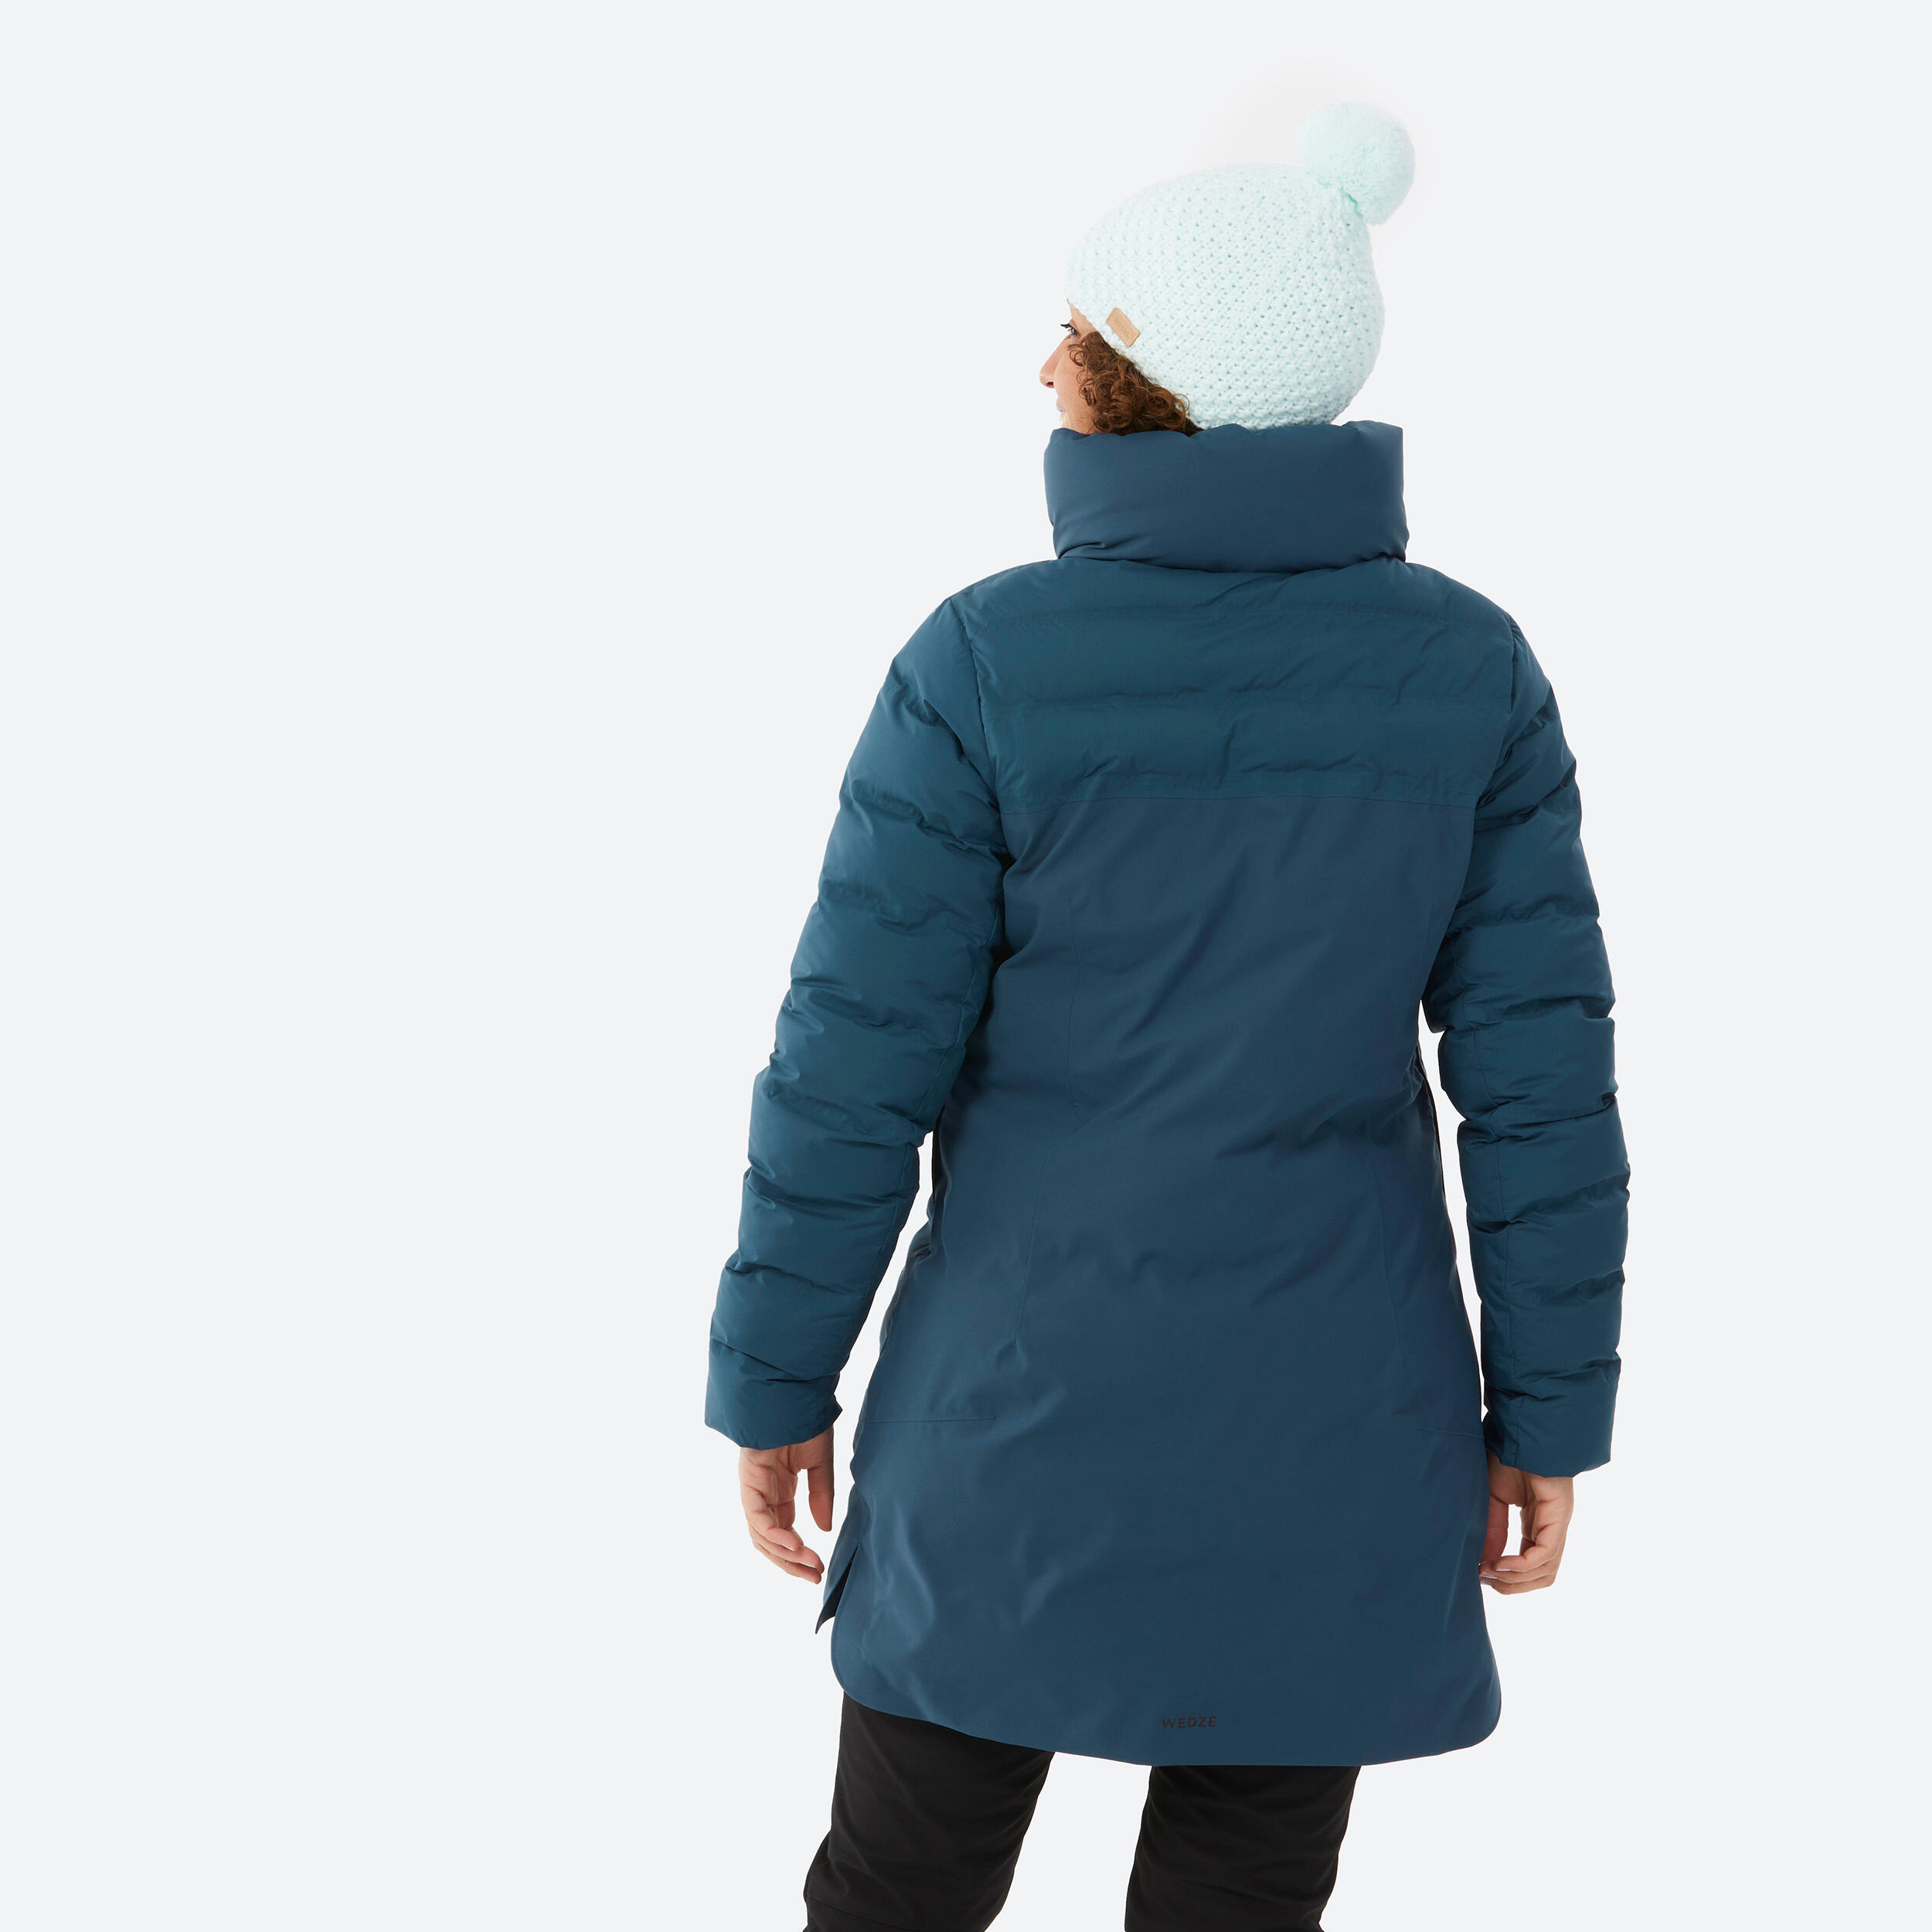 Women's Warm Mid-length Ski Jacket 500 - Blue 5/16